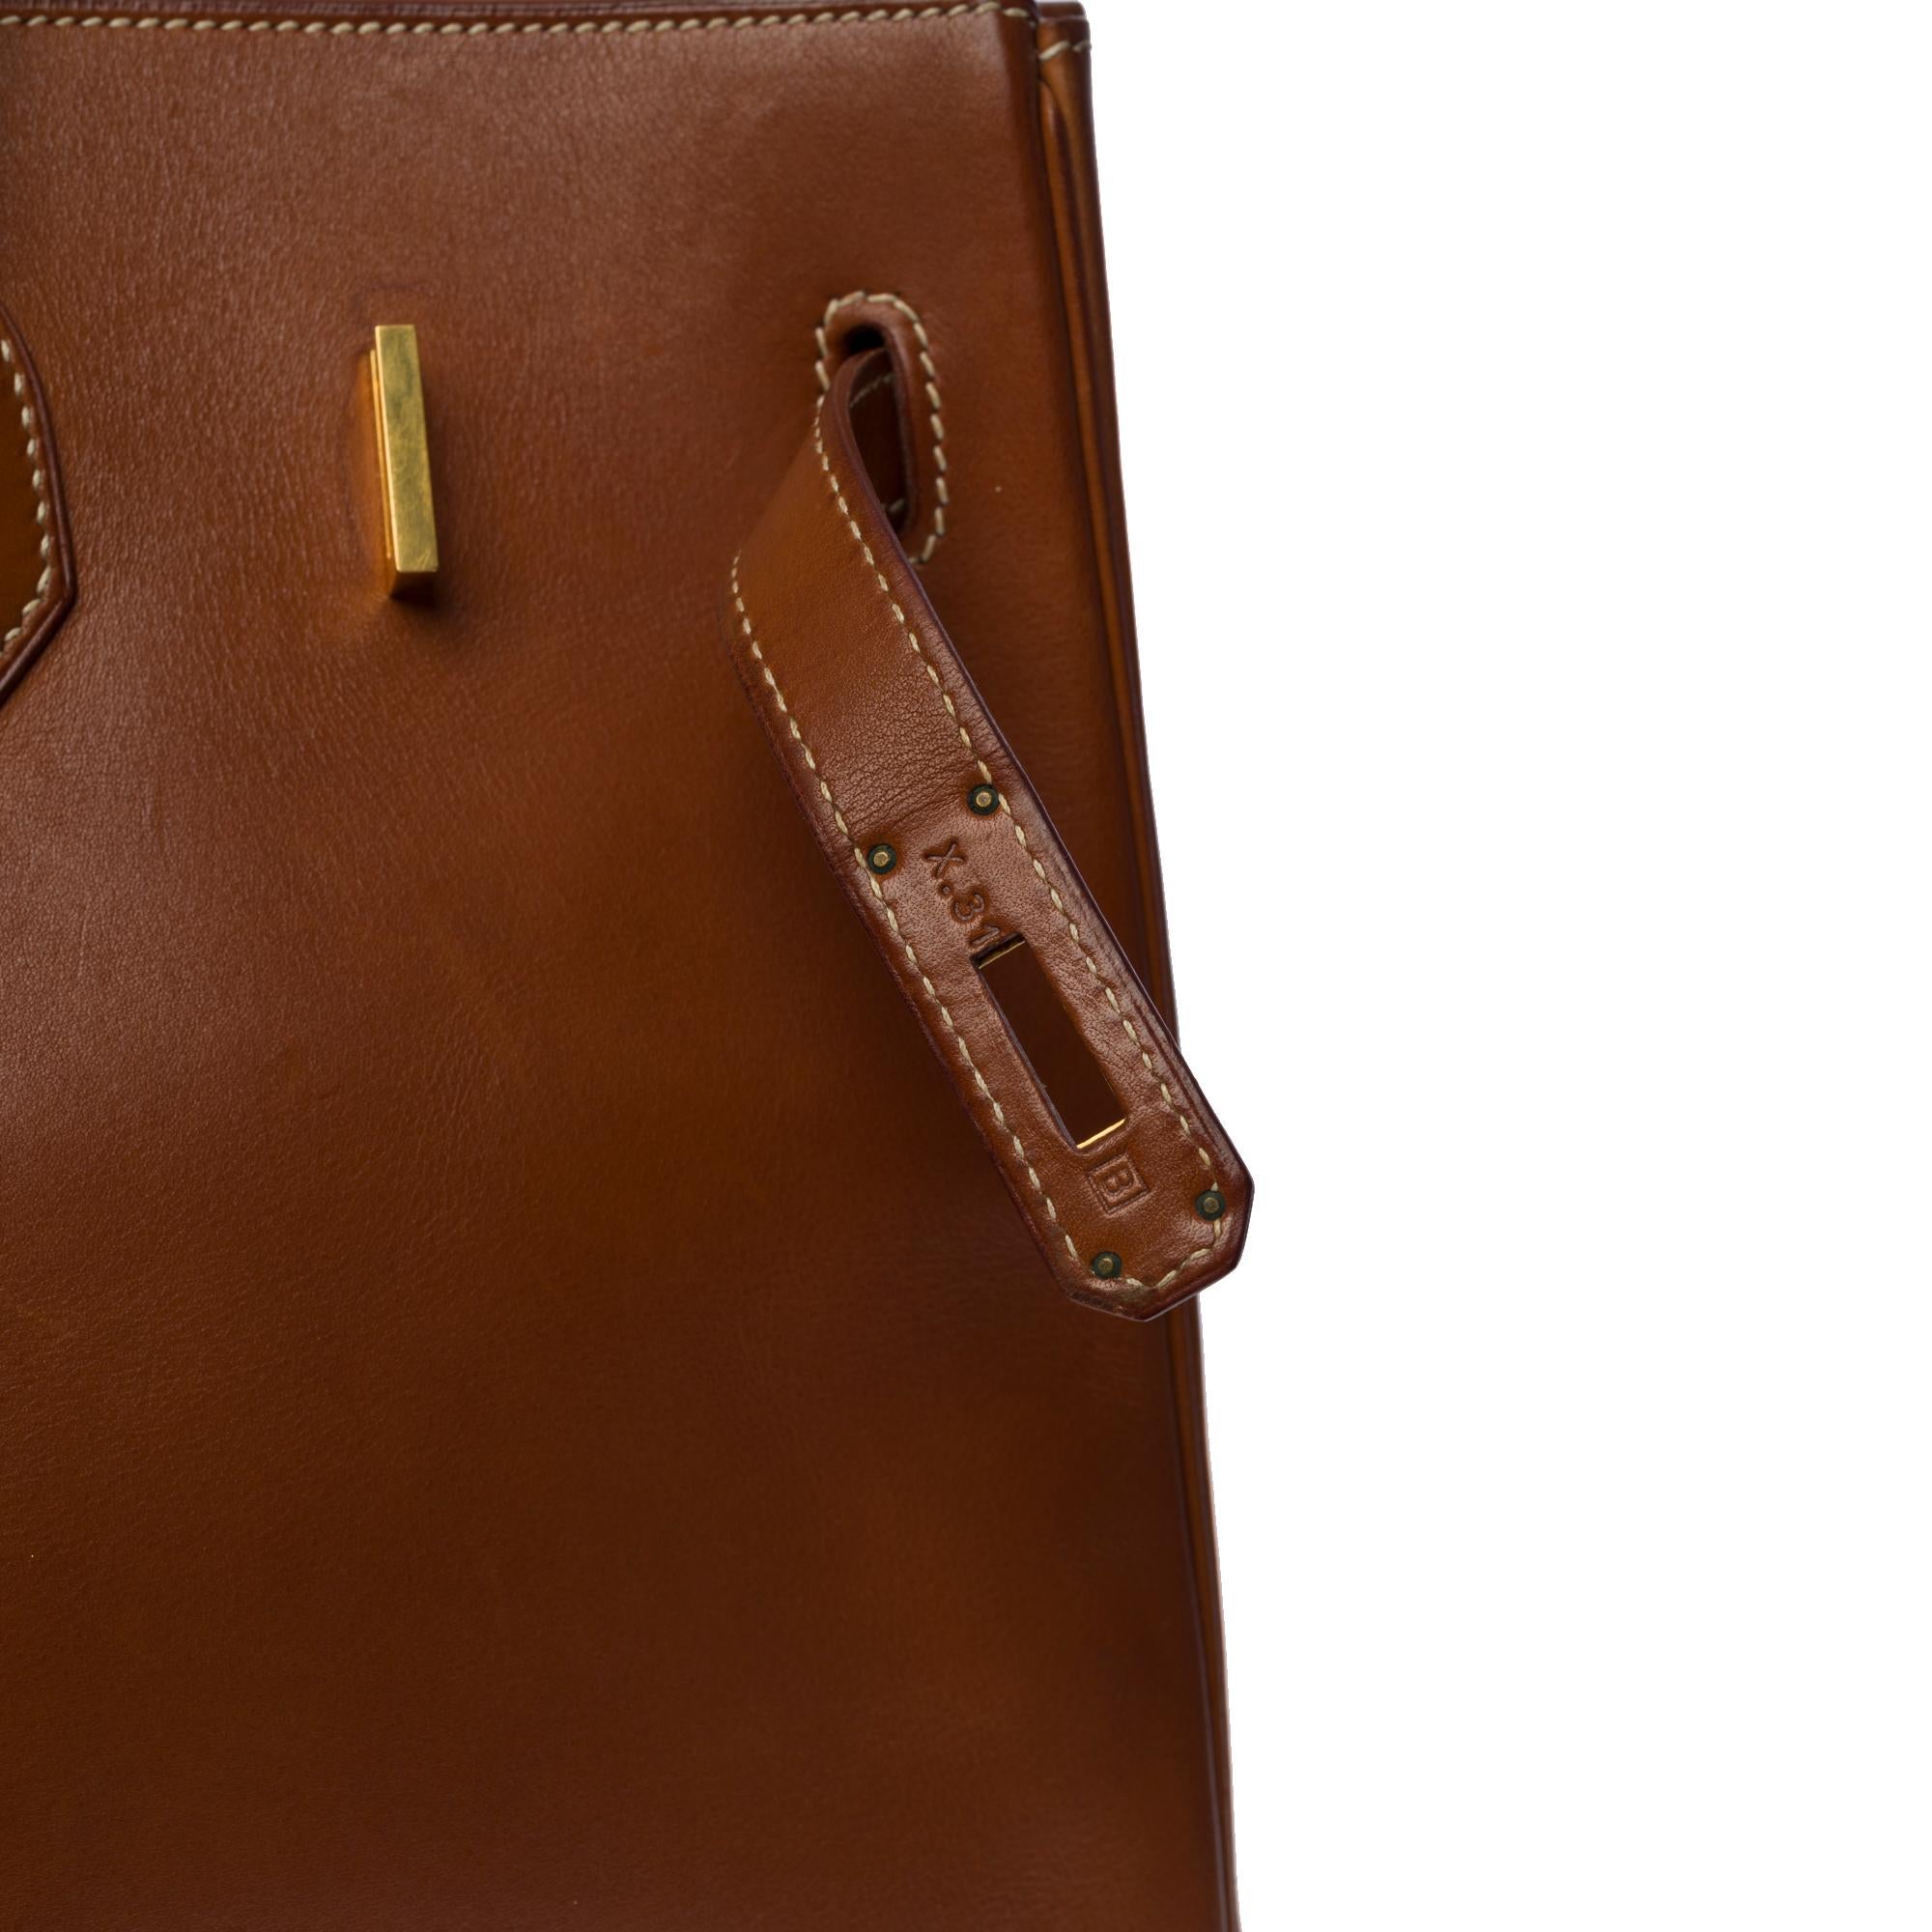 Brown Rare & Exceptional Hermès Birkin 35 handbag in Gold Barenia leather, GHW